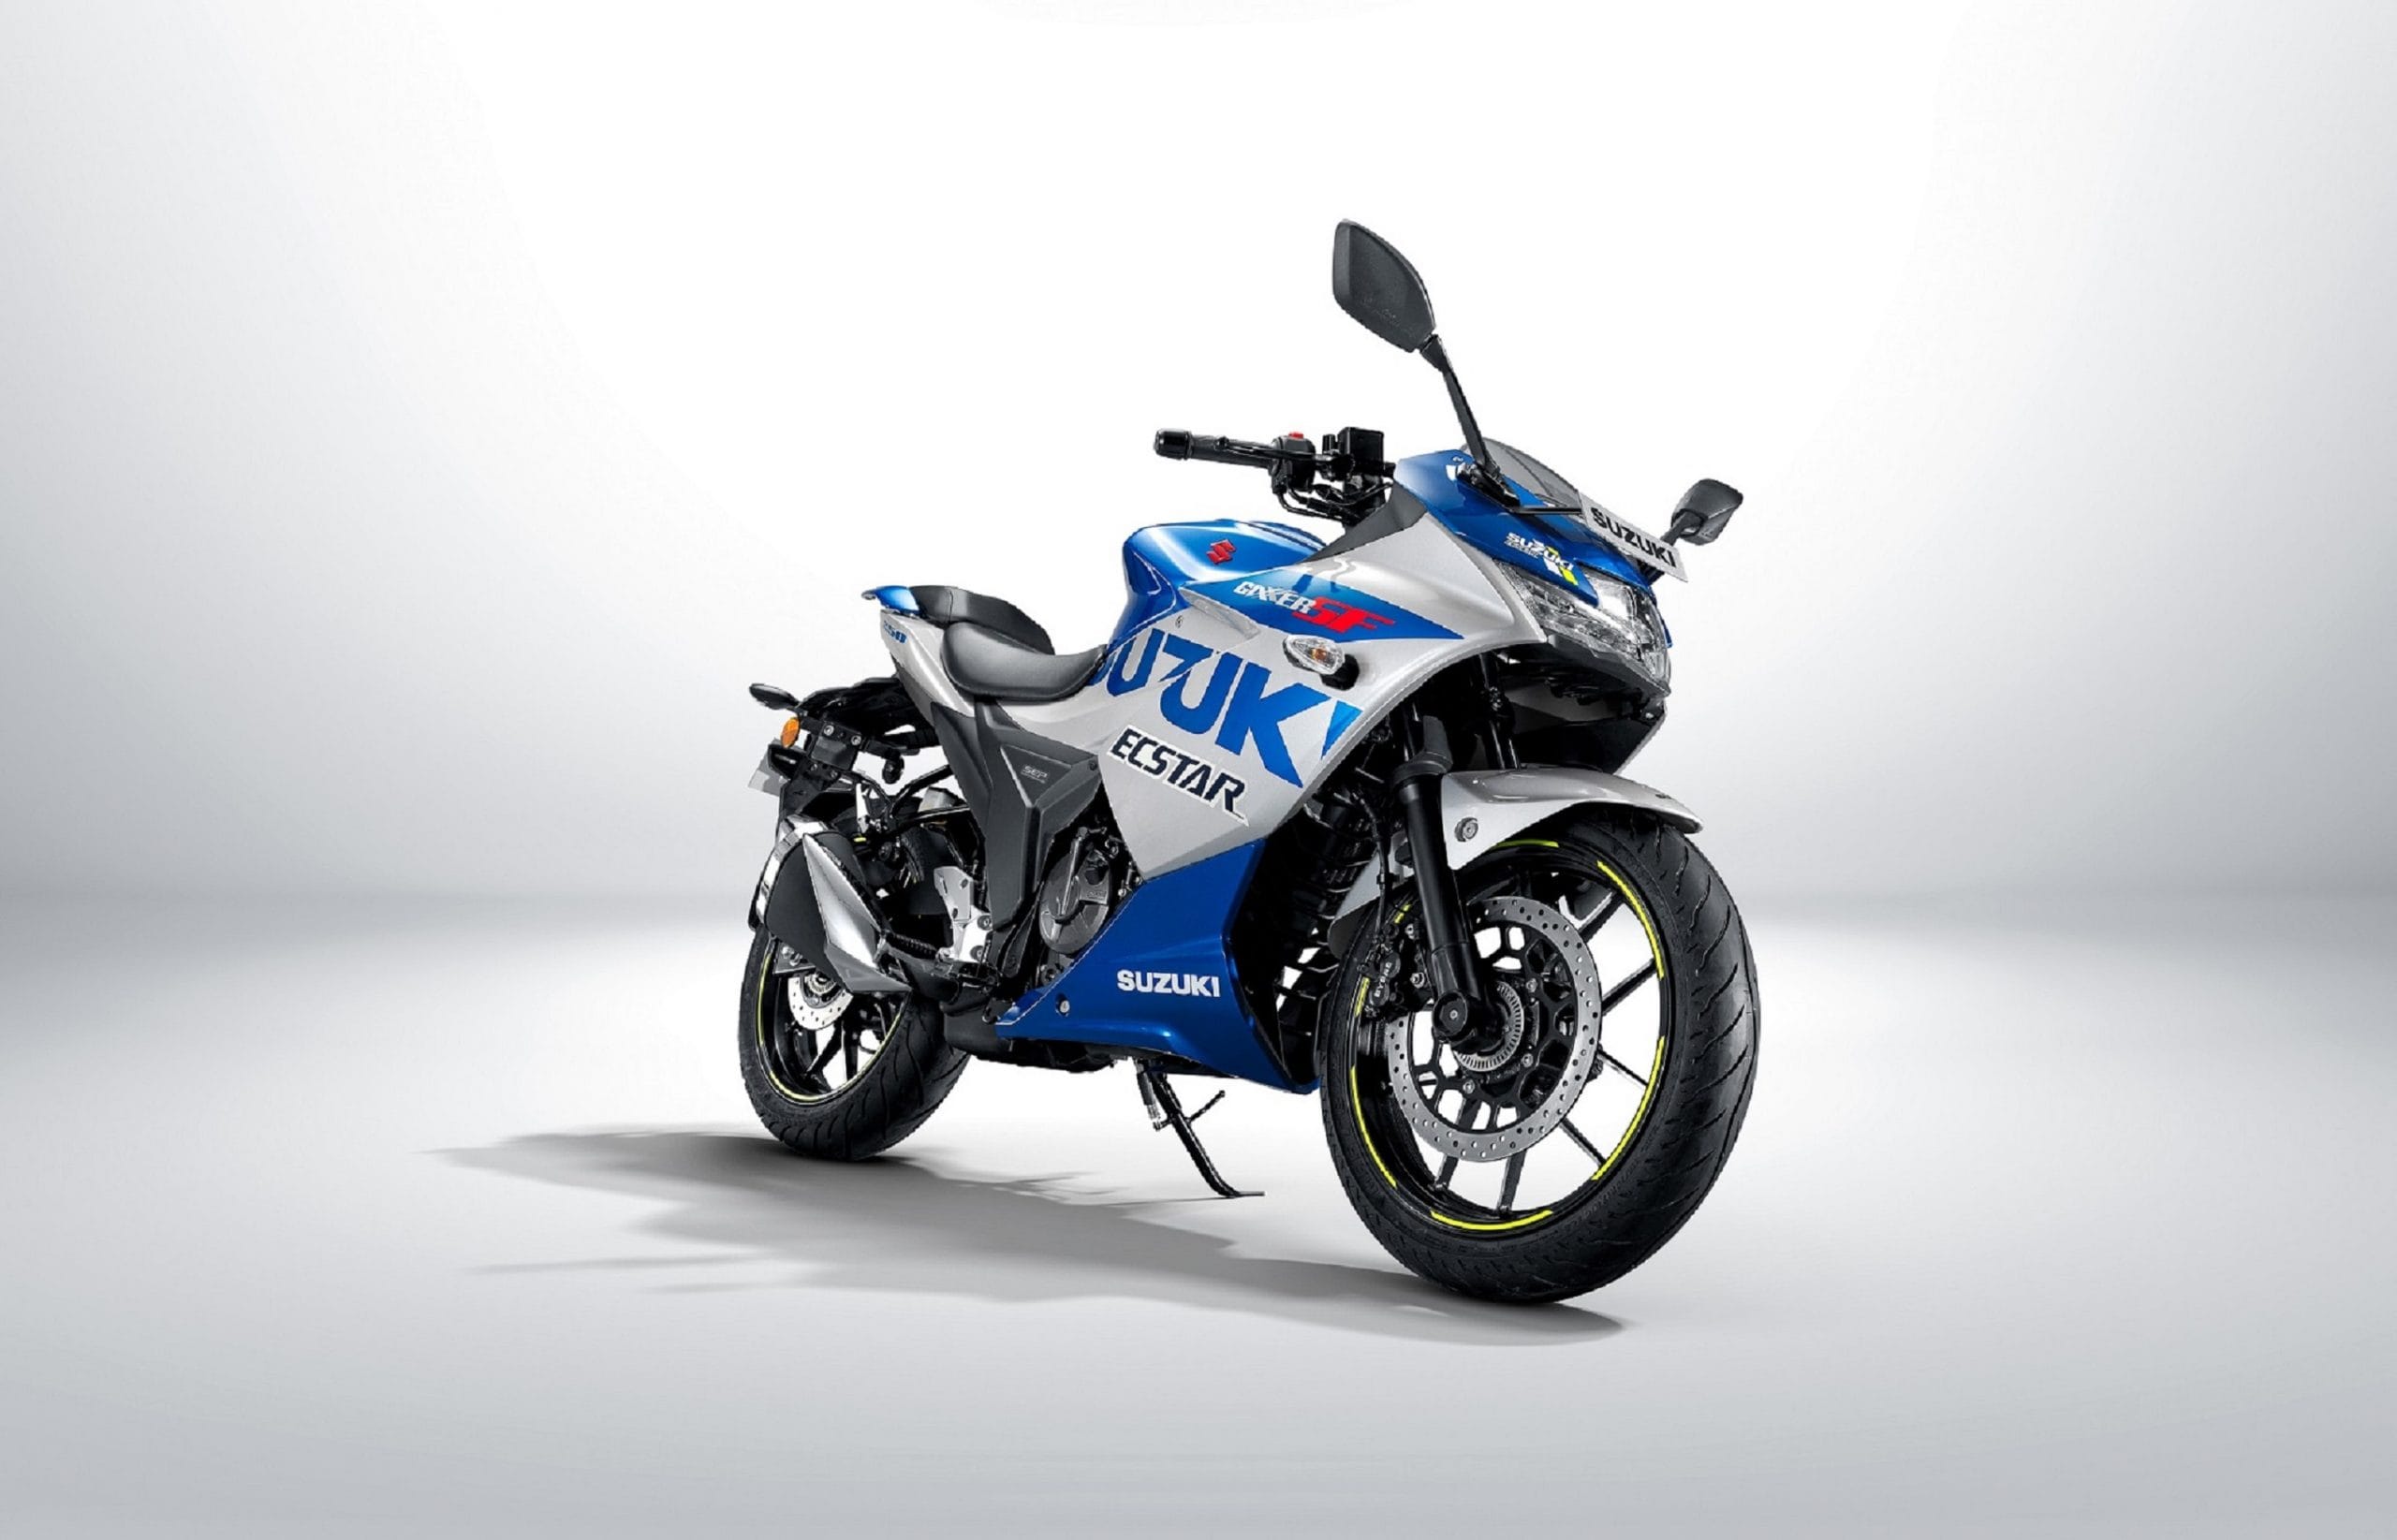 Sport bike Suzuki Gixxer SF250 chuẩn bị được ra mắt tại Việt Nam?